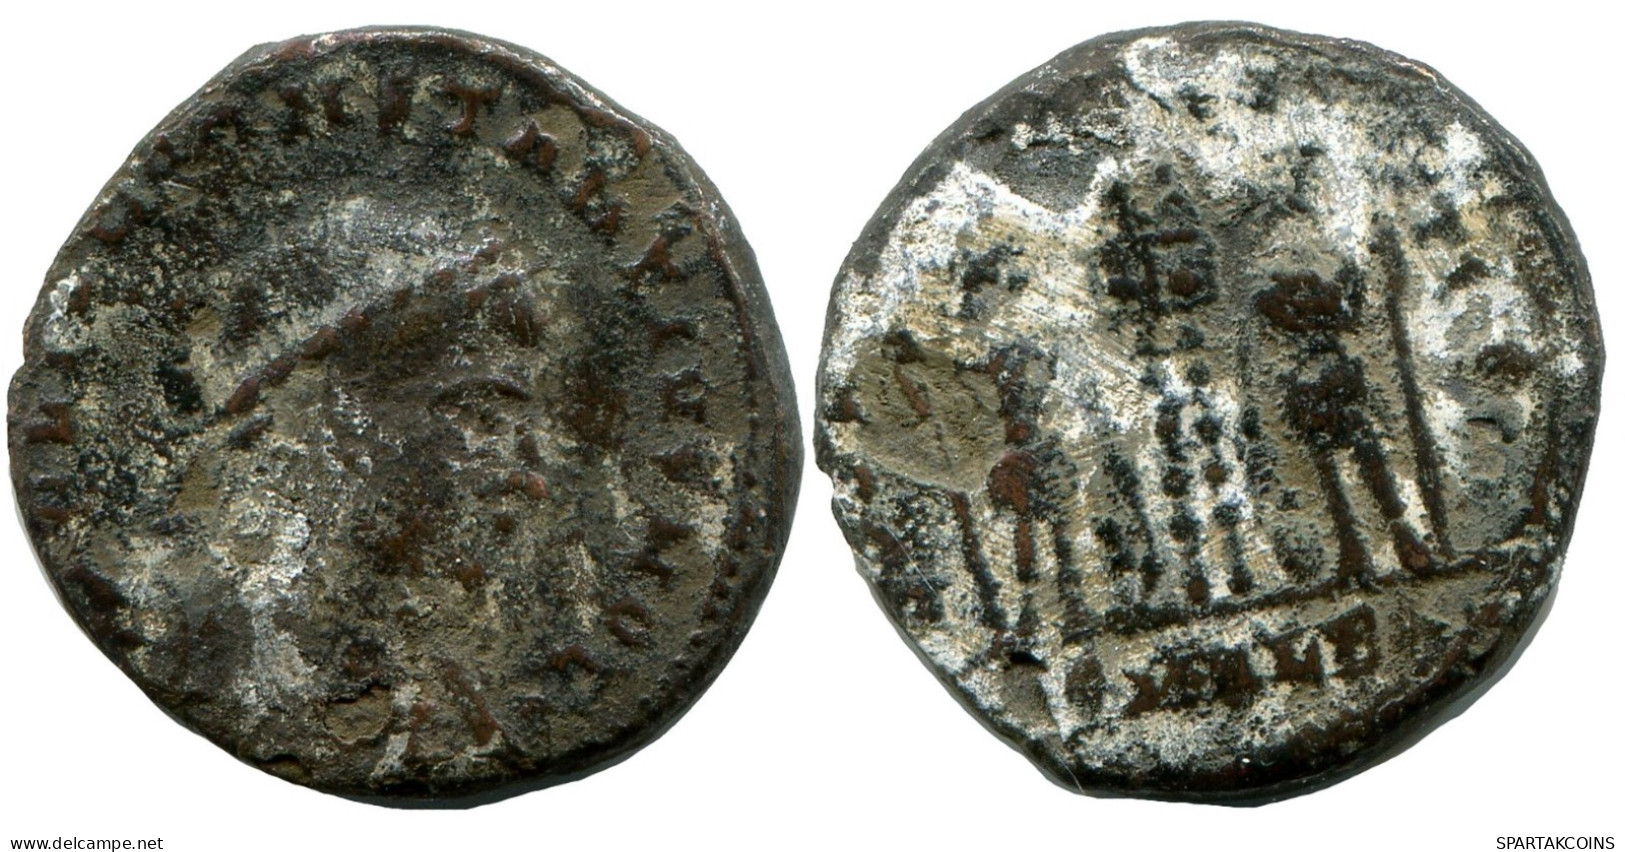 CONSTANTIUS II MINTED IN ALEKSANDRIA FOUND IN IHNASYAH HOARD #ANC10446.14.U.A - El Impero Christiano (307 / 363)